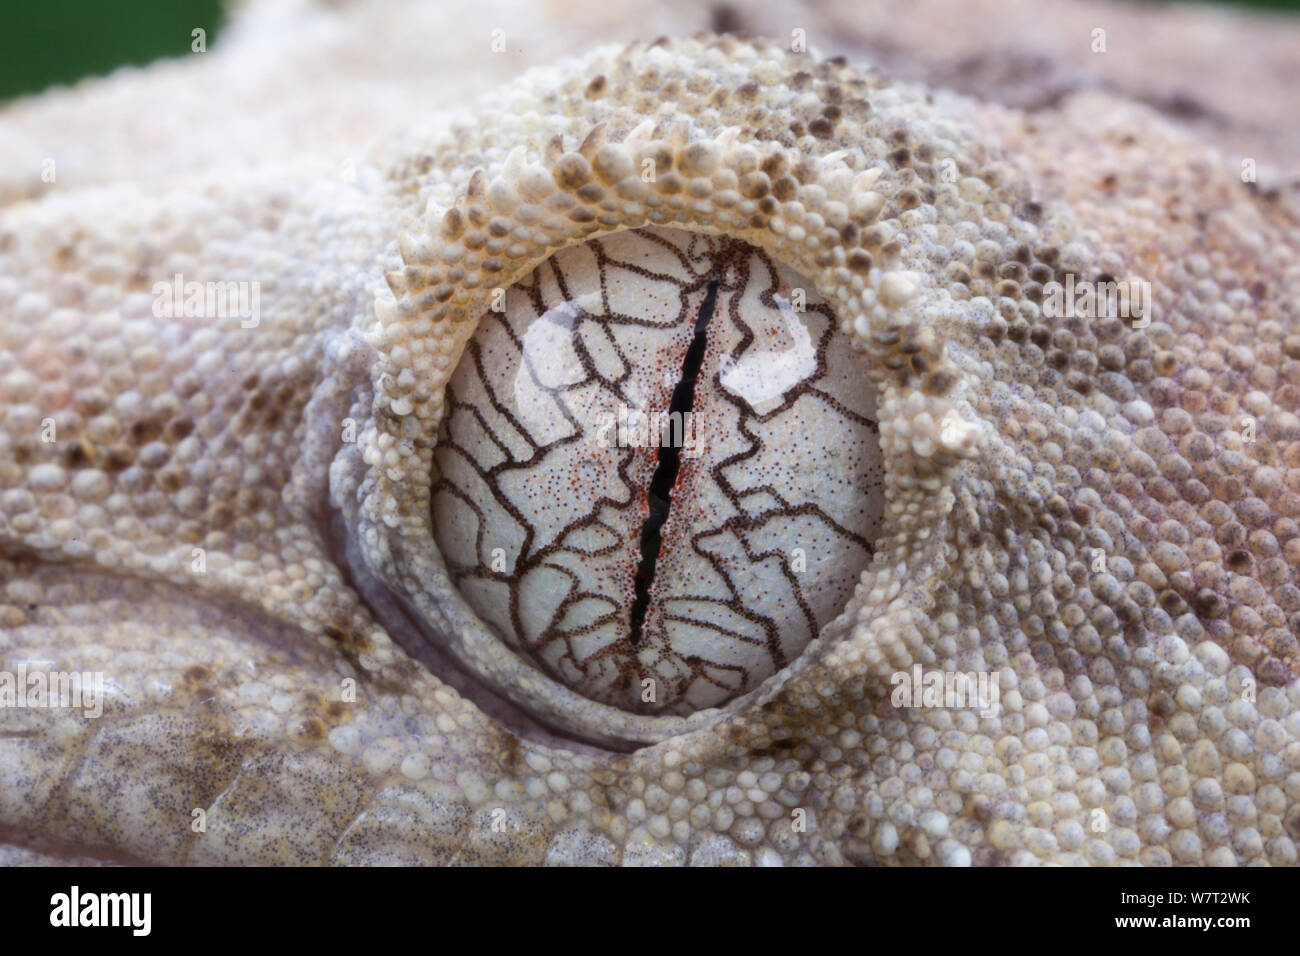 Mossy New Caledonian gecko (Mniarogekko / Rhacodactylus chahoua) close-up of eye, captive from New Caledonia. Stock Photo